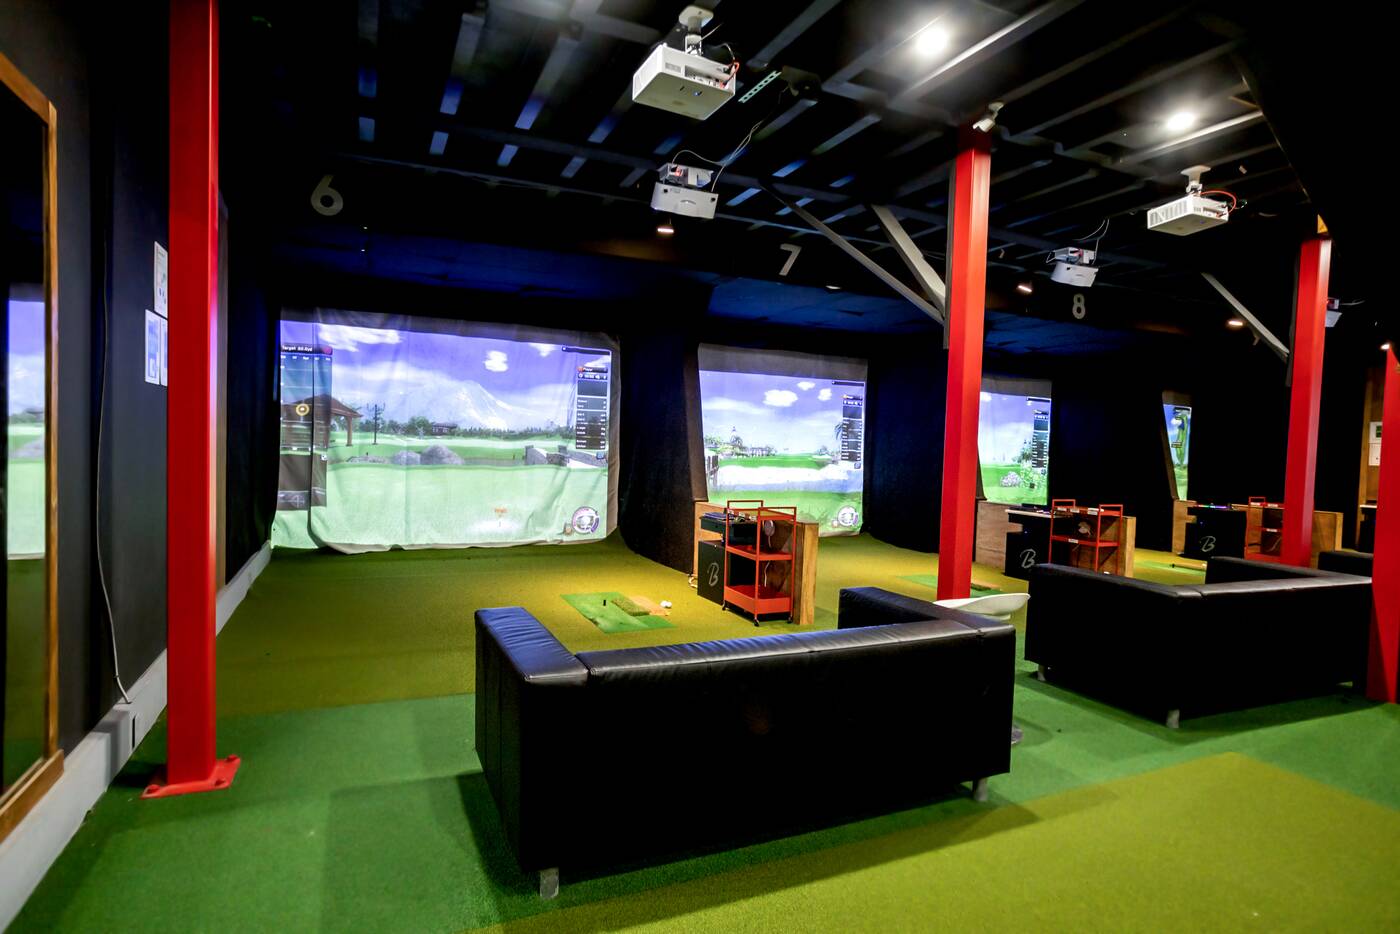 Improve Your Golf Skills With indoor golf target 